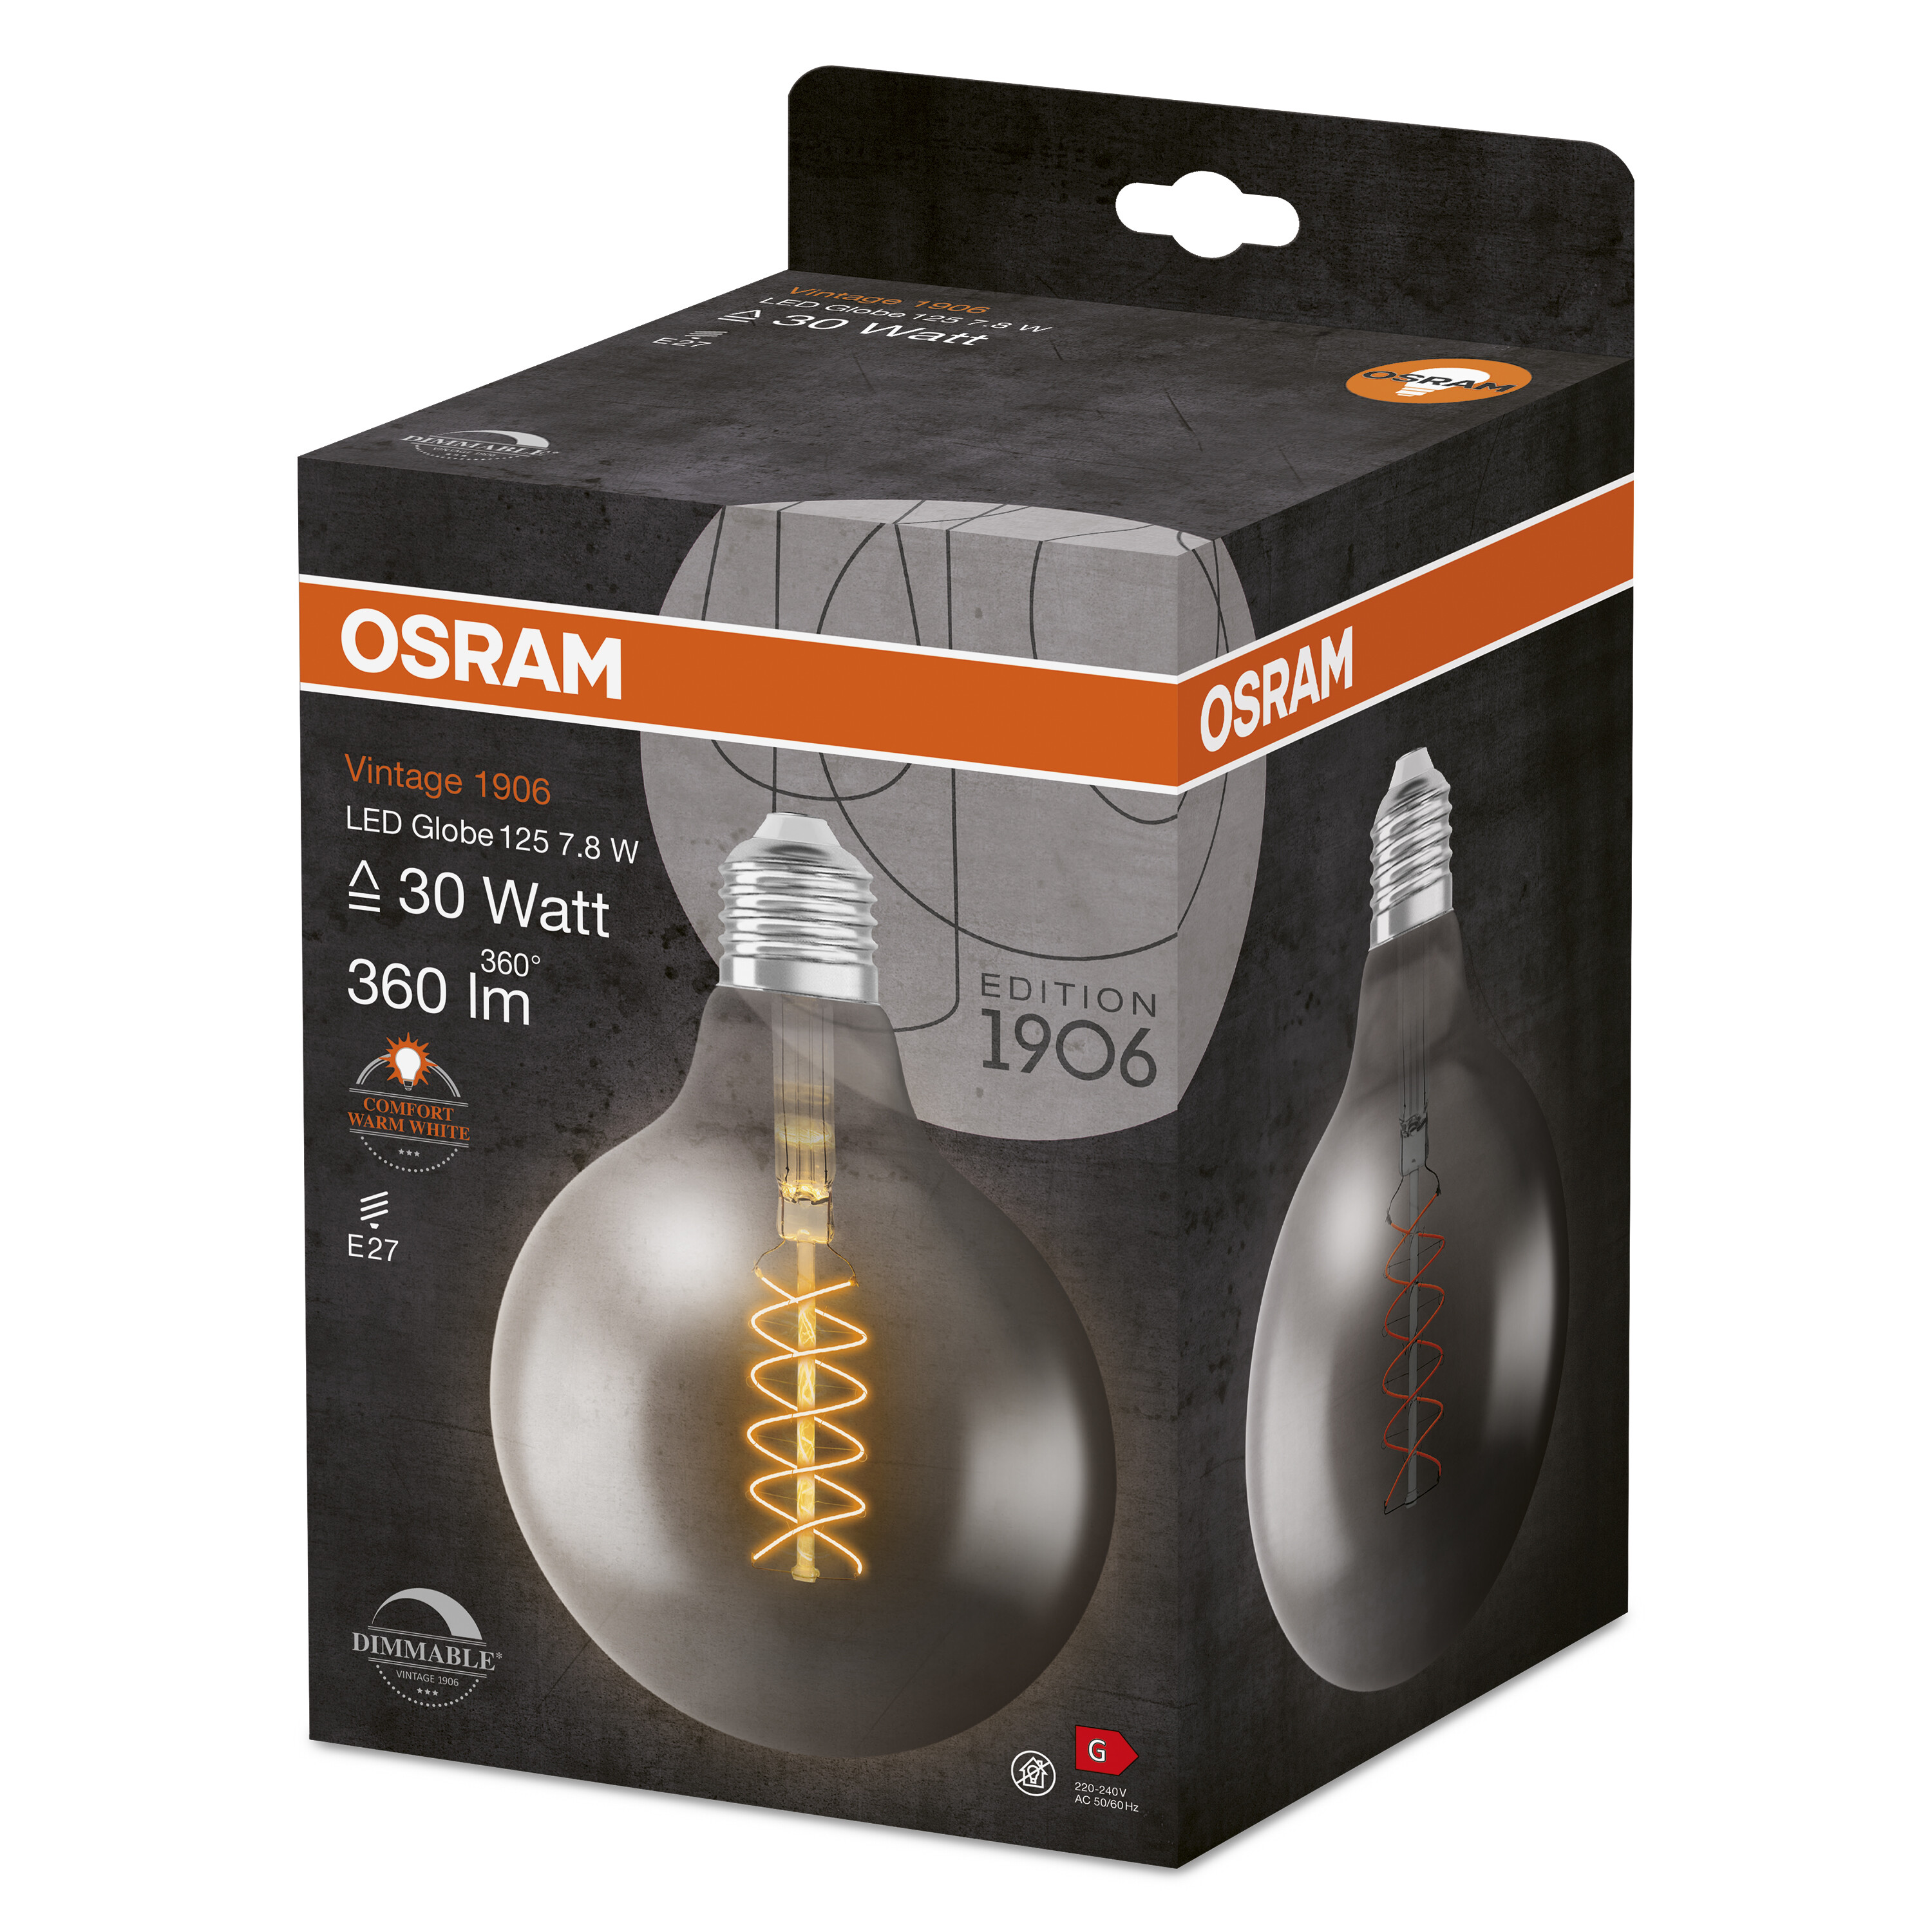 OSRAM  Vintage 1906 LED LED 360 Lampe DIM Lumen Warmweiß